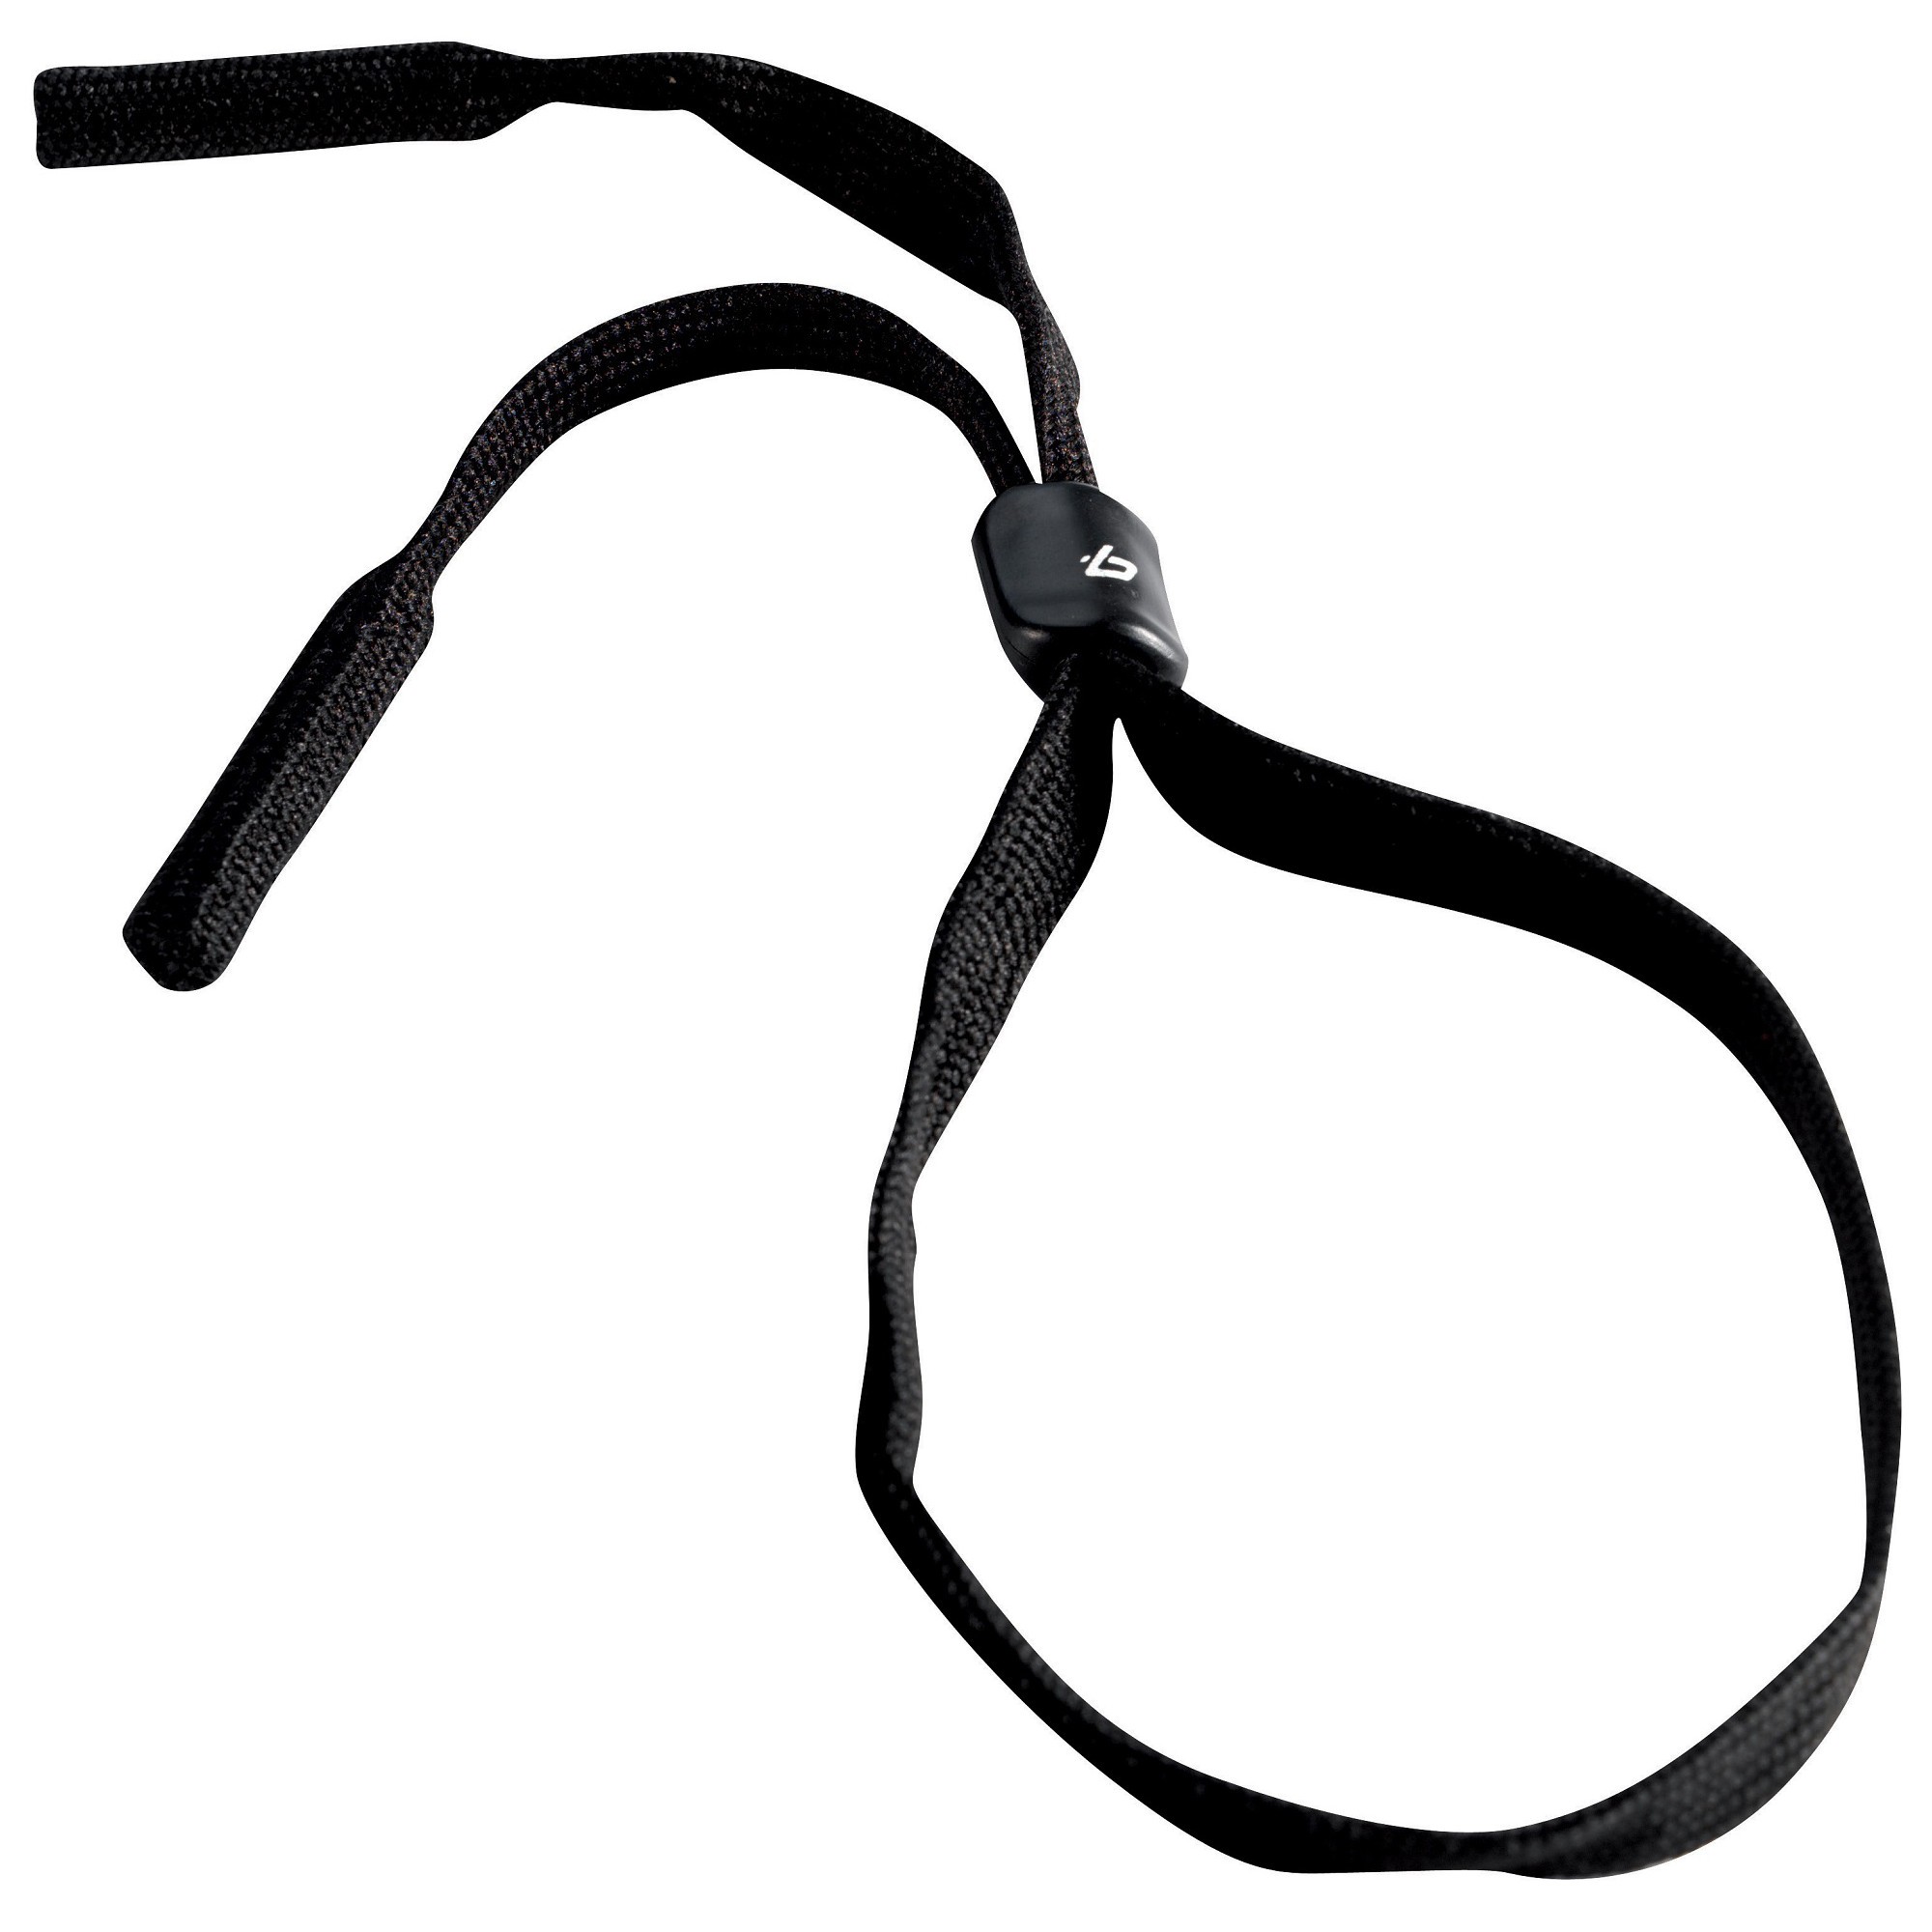 Crossfire 921 Sniper Safety Glasses - Black Frame - Smoke Lens